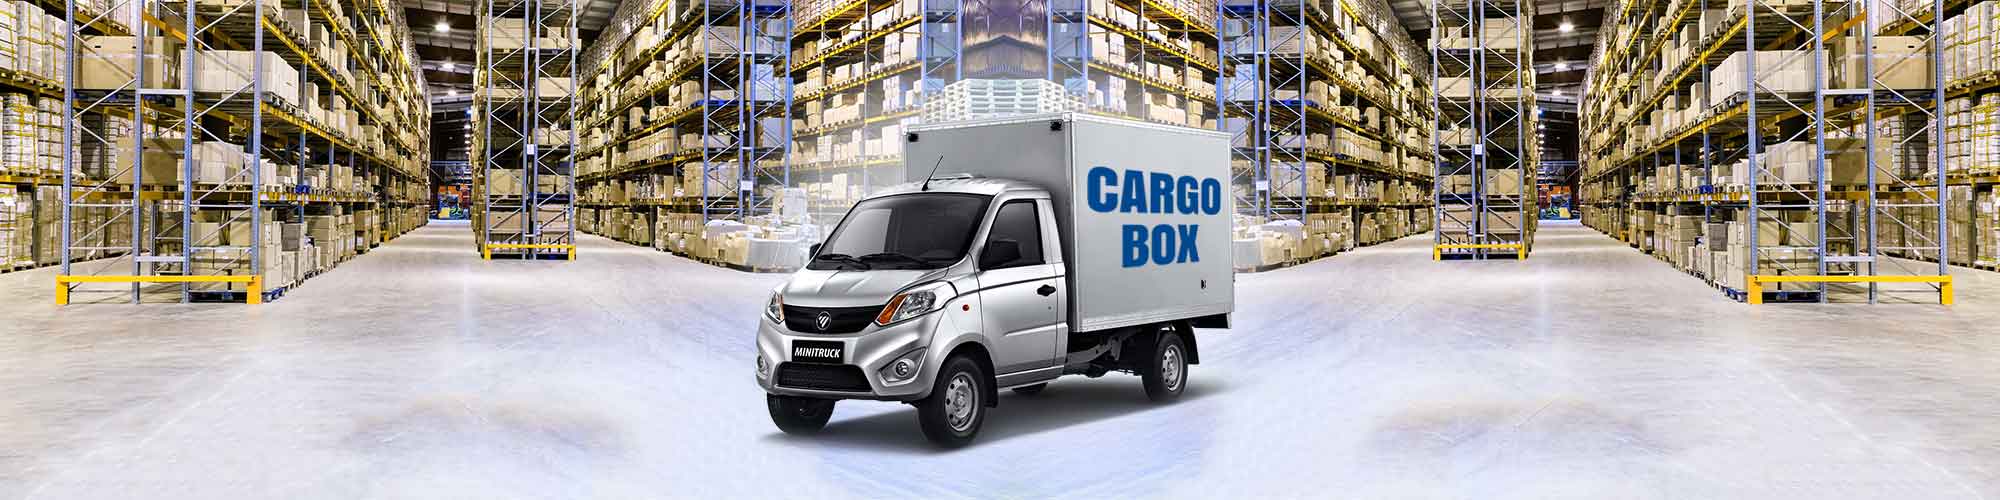 Gratour-Minitruk-Cargo-Box